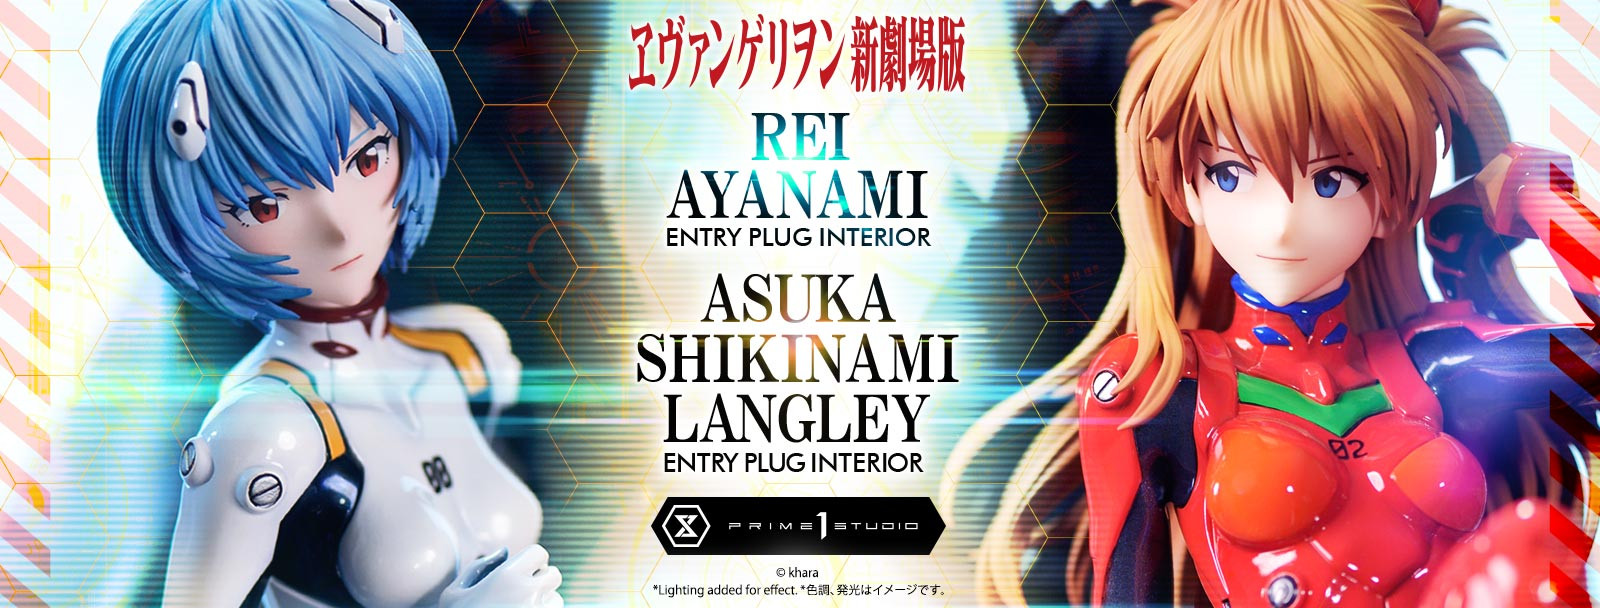 Evangelion Rei & Asuka Special Campaign-main